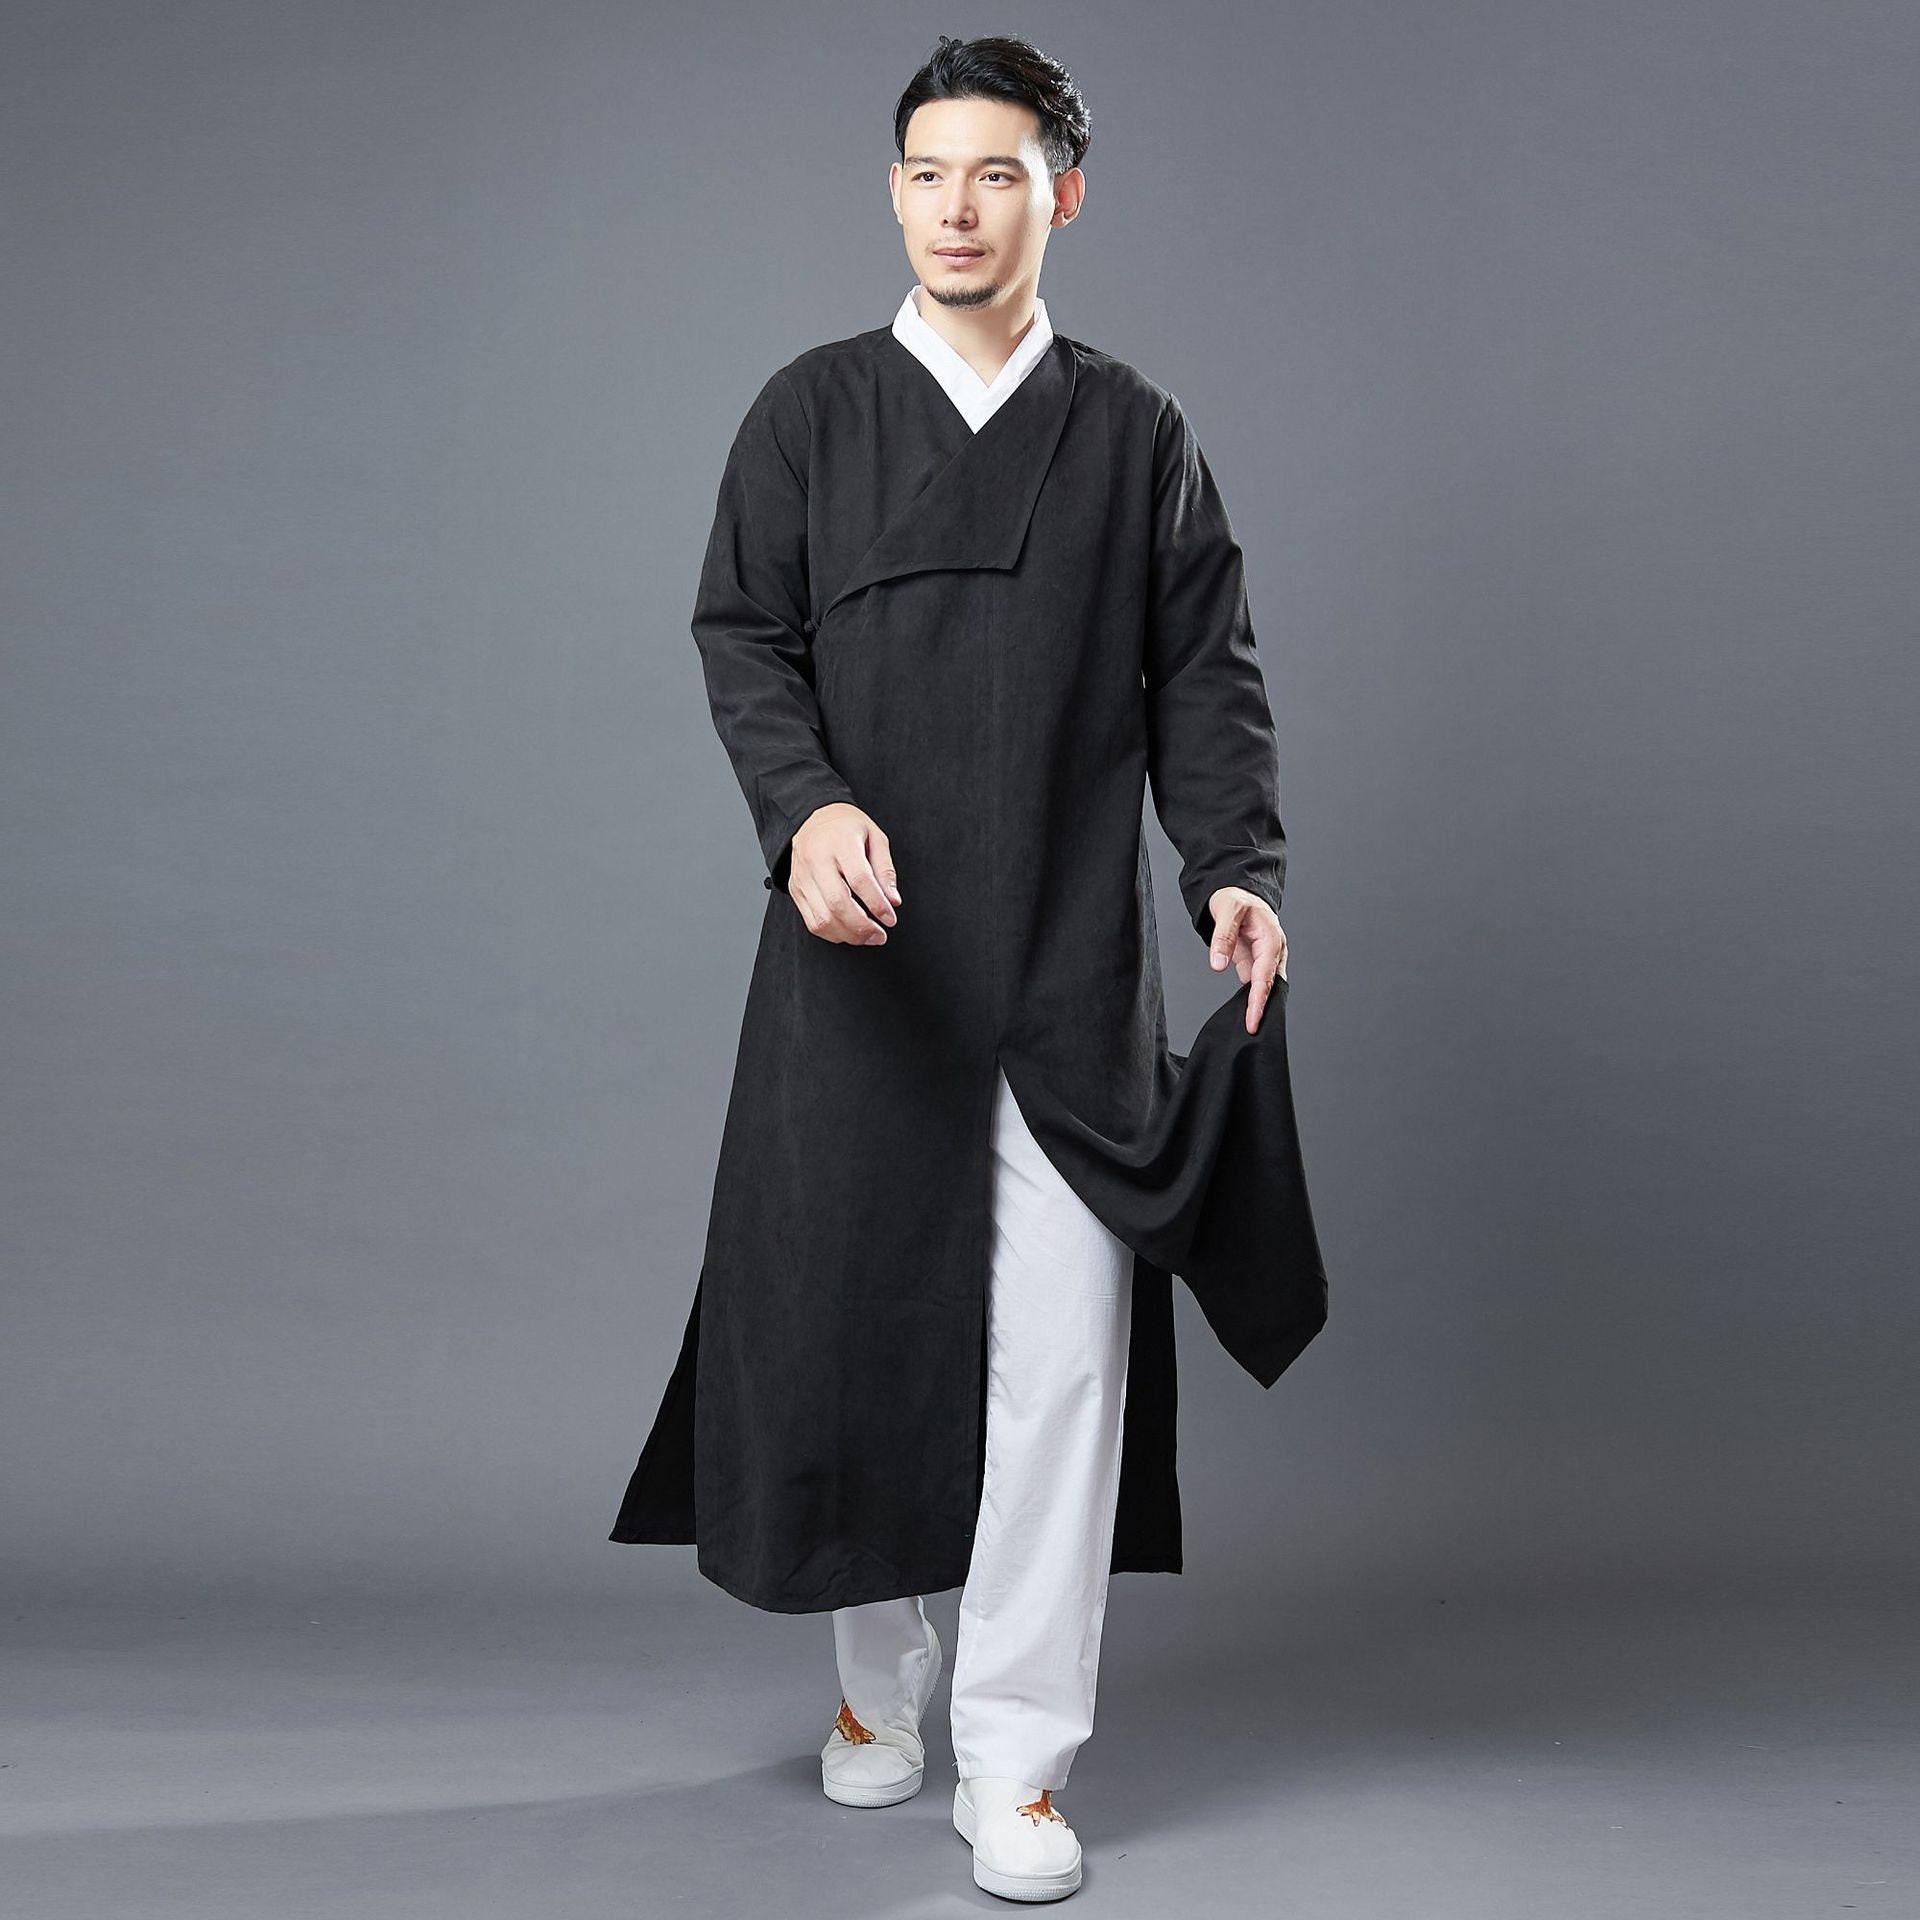 Chinese Style Wudang Robe Hanfu Long Robe Monk Robe Men's - Etsy